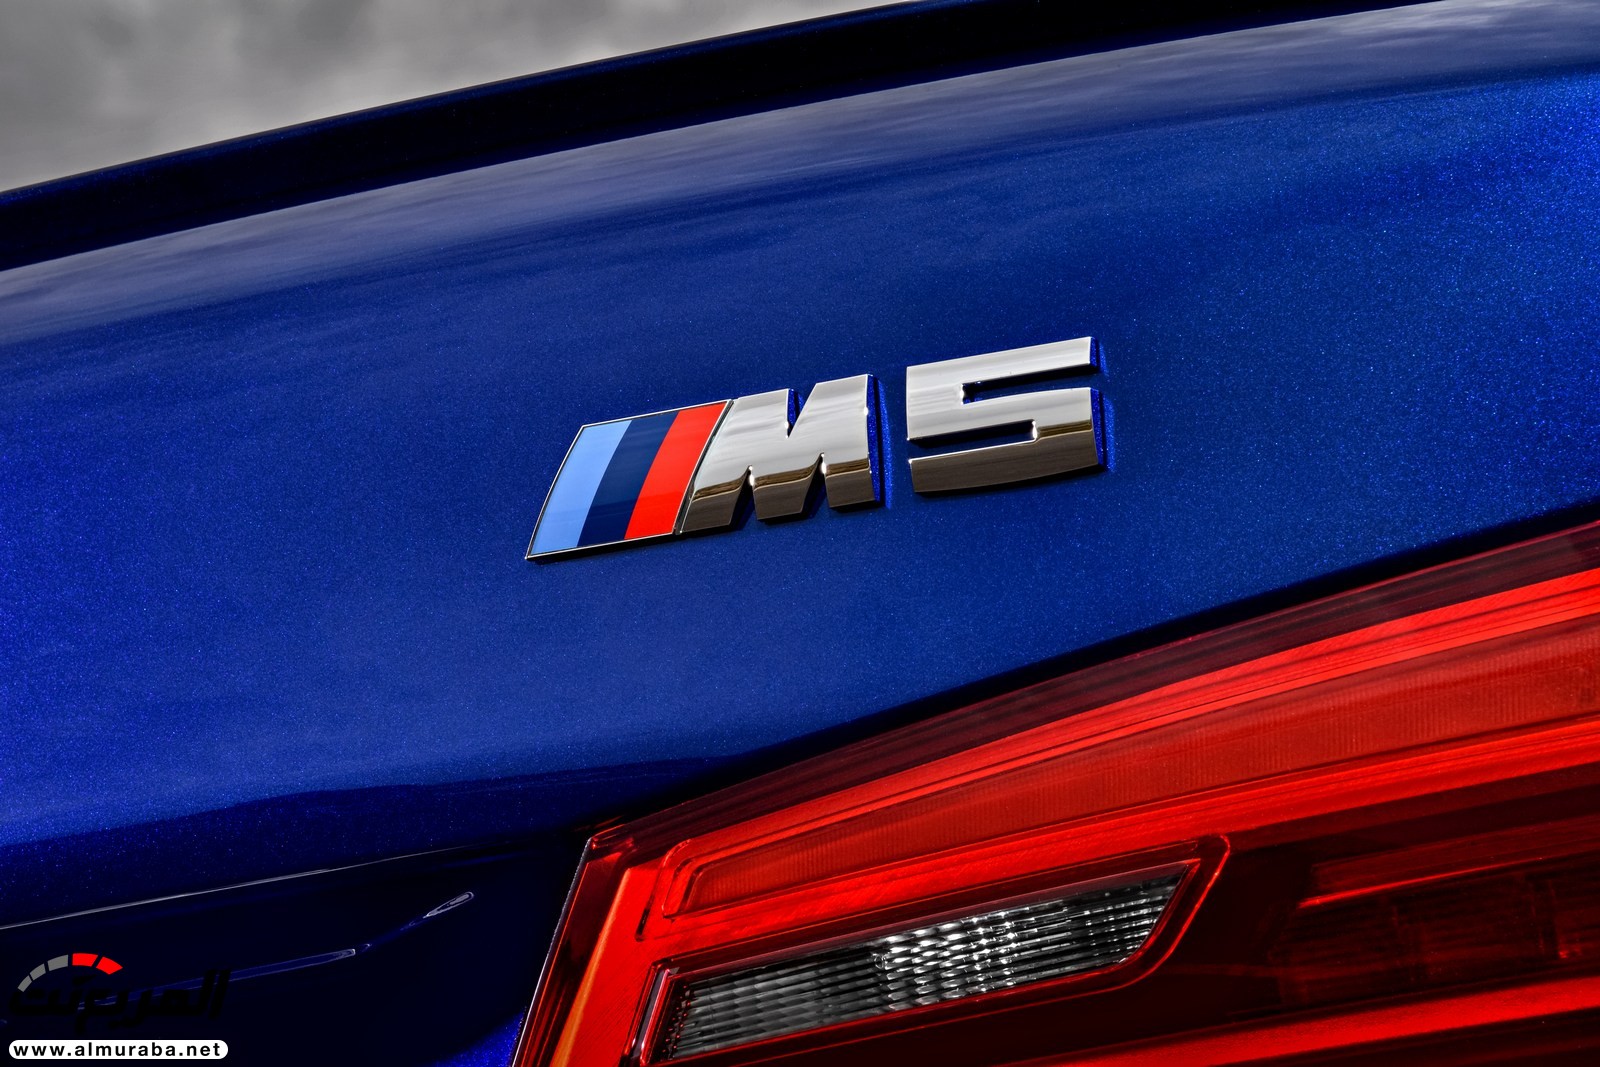 بي ام دبليو M5 2018 تكشف نفسها رسمياً بقوة ٦٠٠ حصان "صور ومواصفات" BMW 30